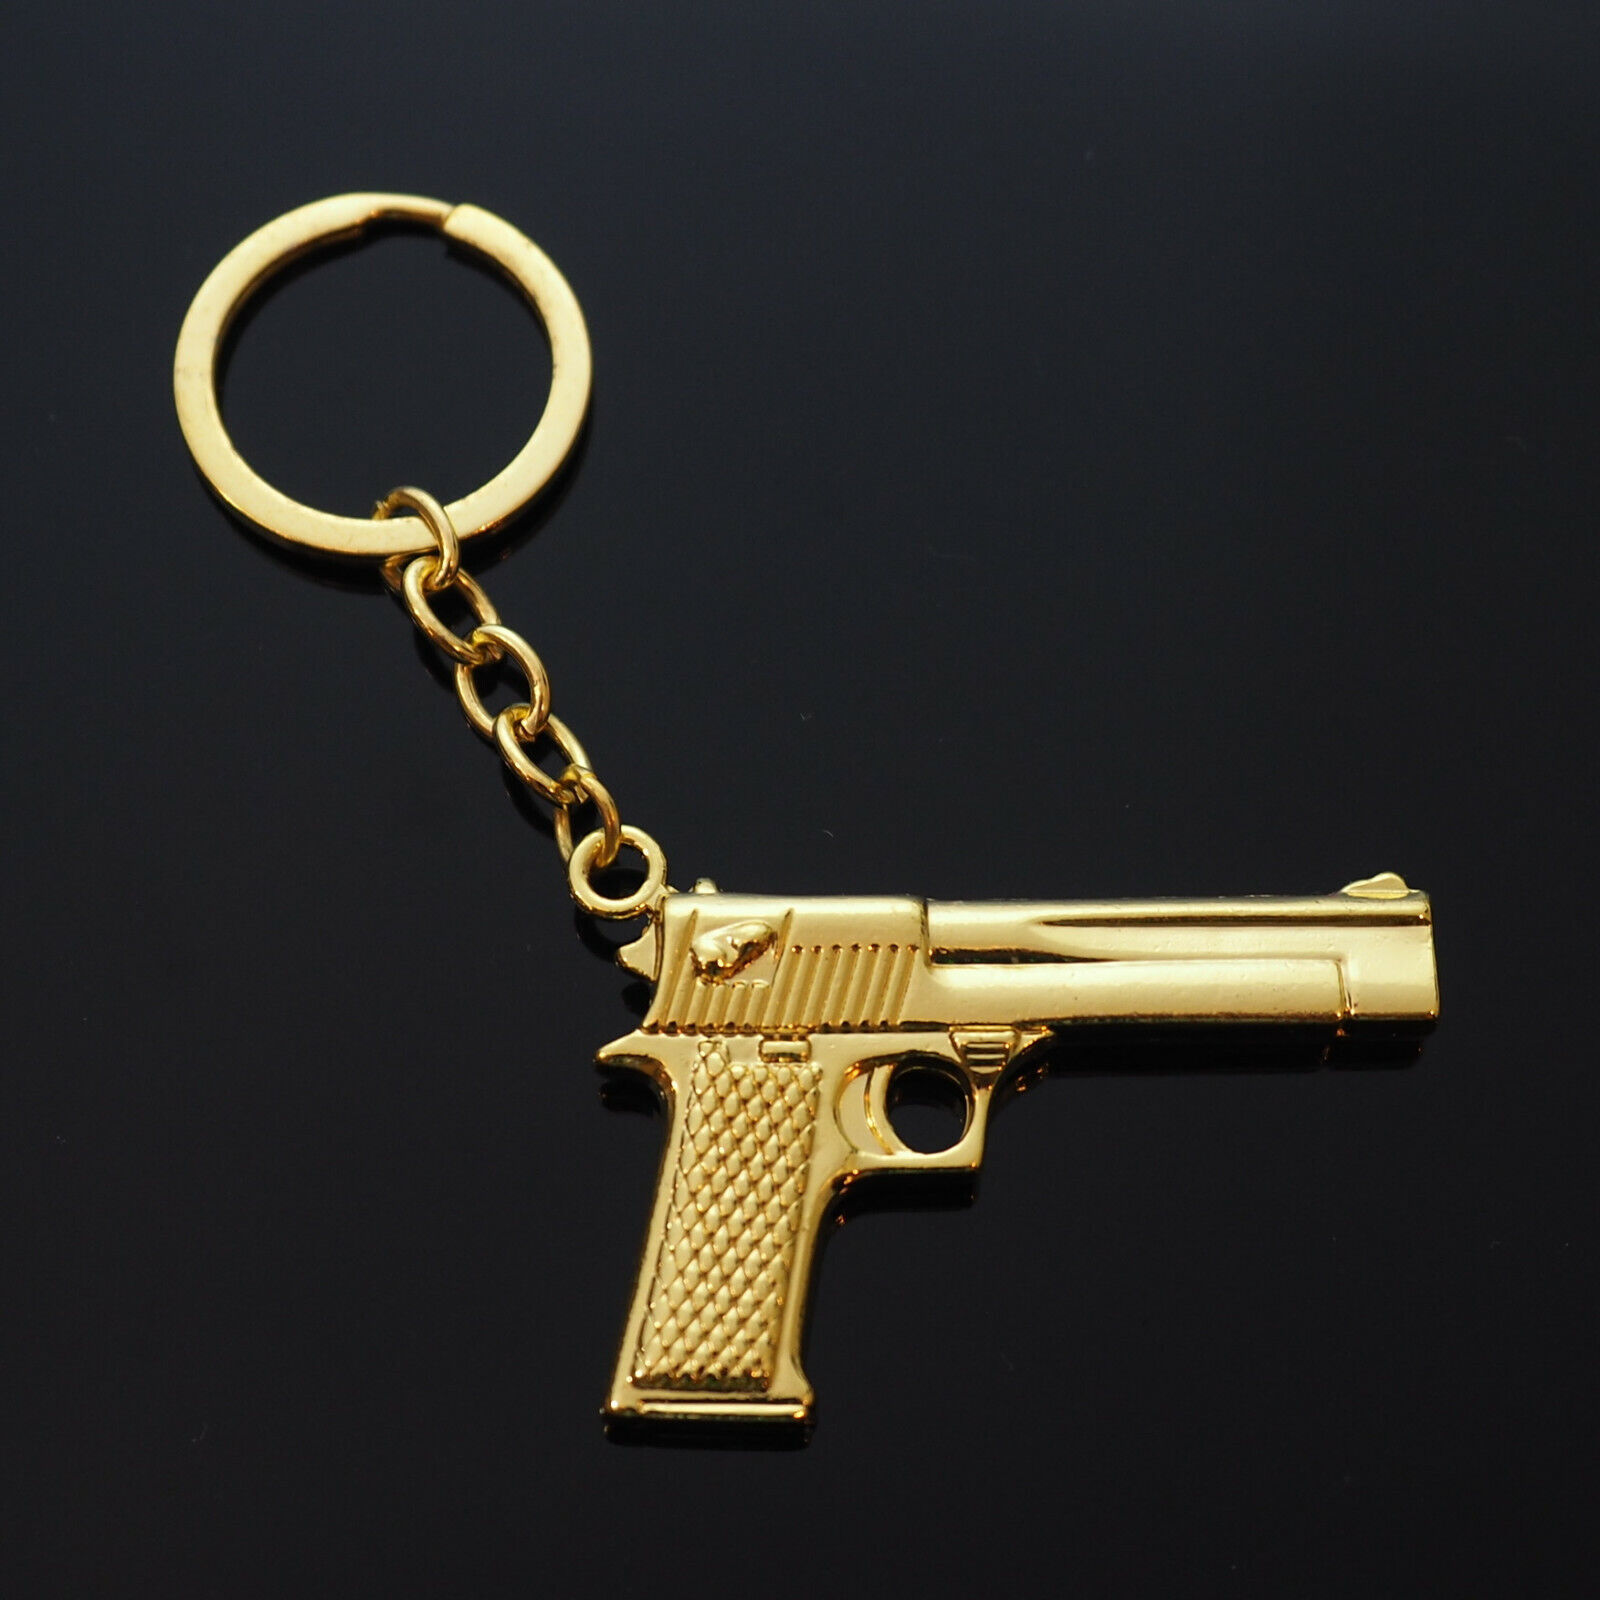 Gold Gun Keychain Weapon 40g Pistol Keyring Novelty Key Ring Fob  - Nice Weight